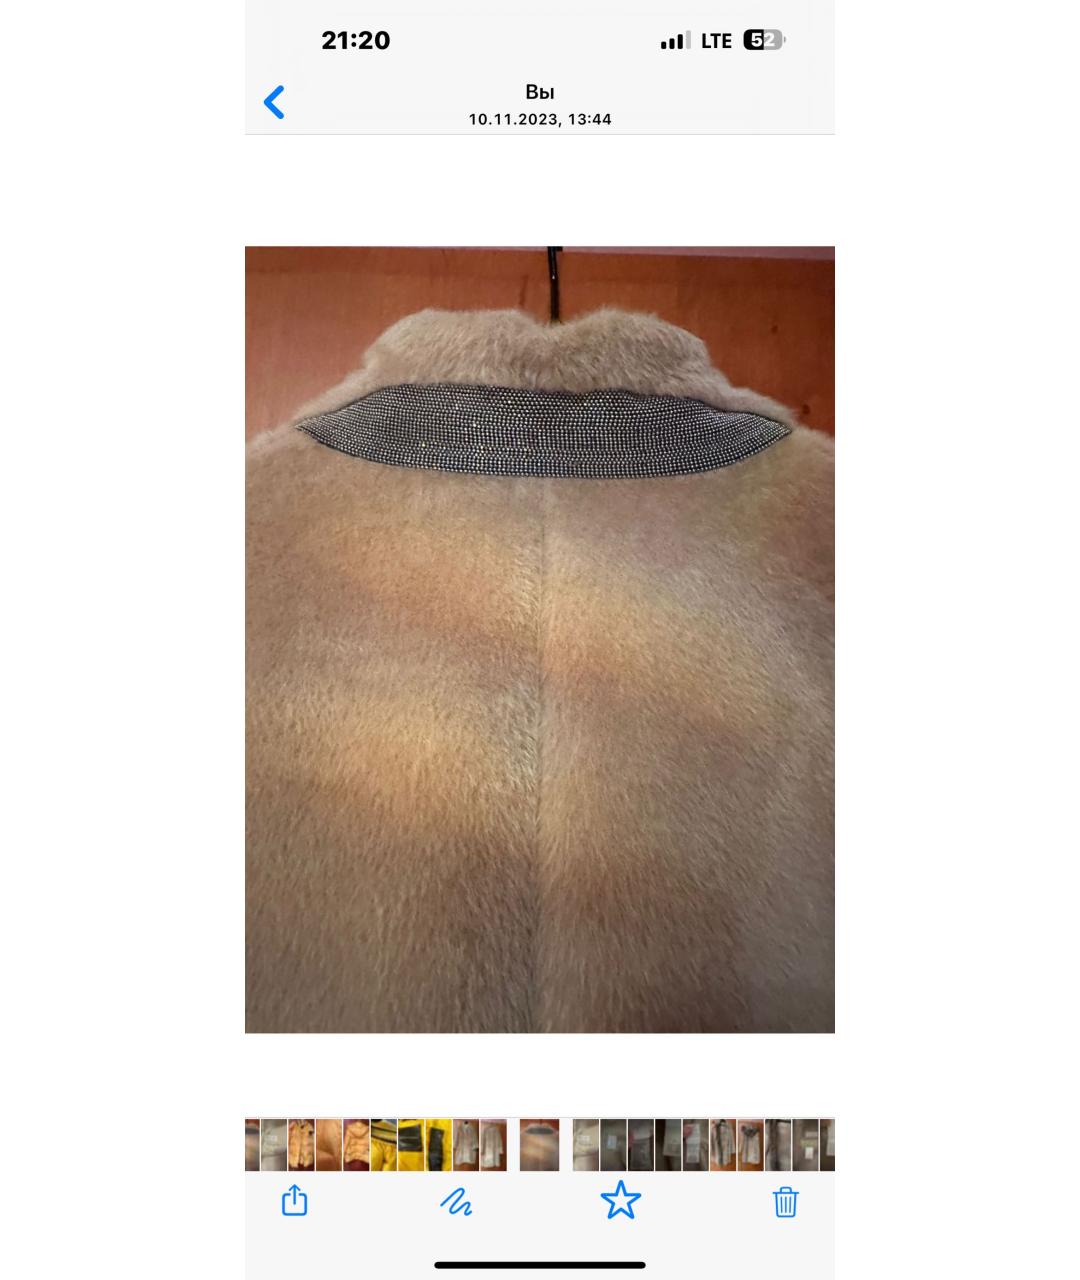 BRUNELLO CUCINELLI Бежевое шерстяное пальто, фото 4